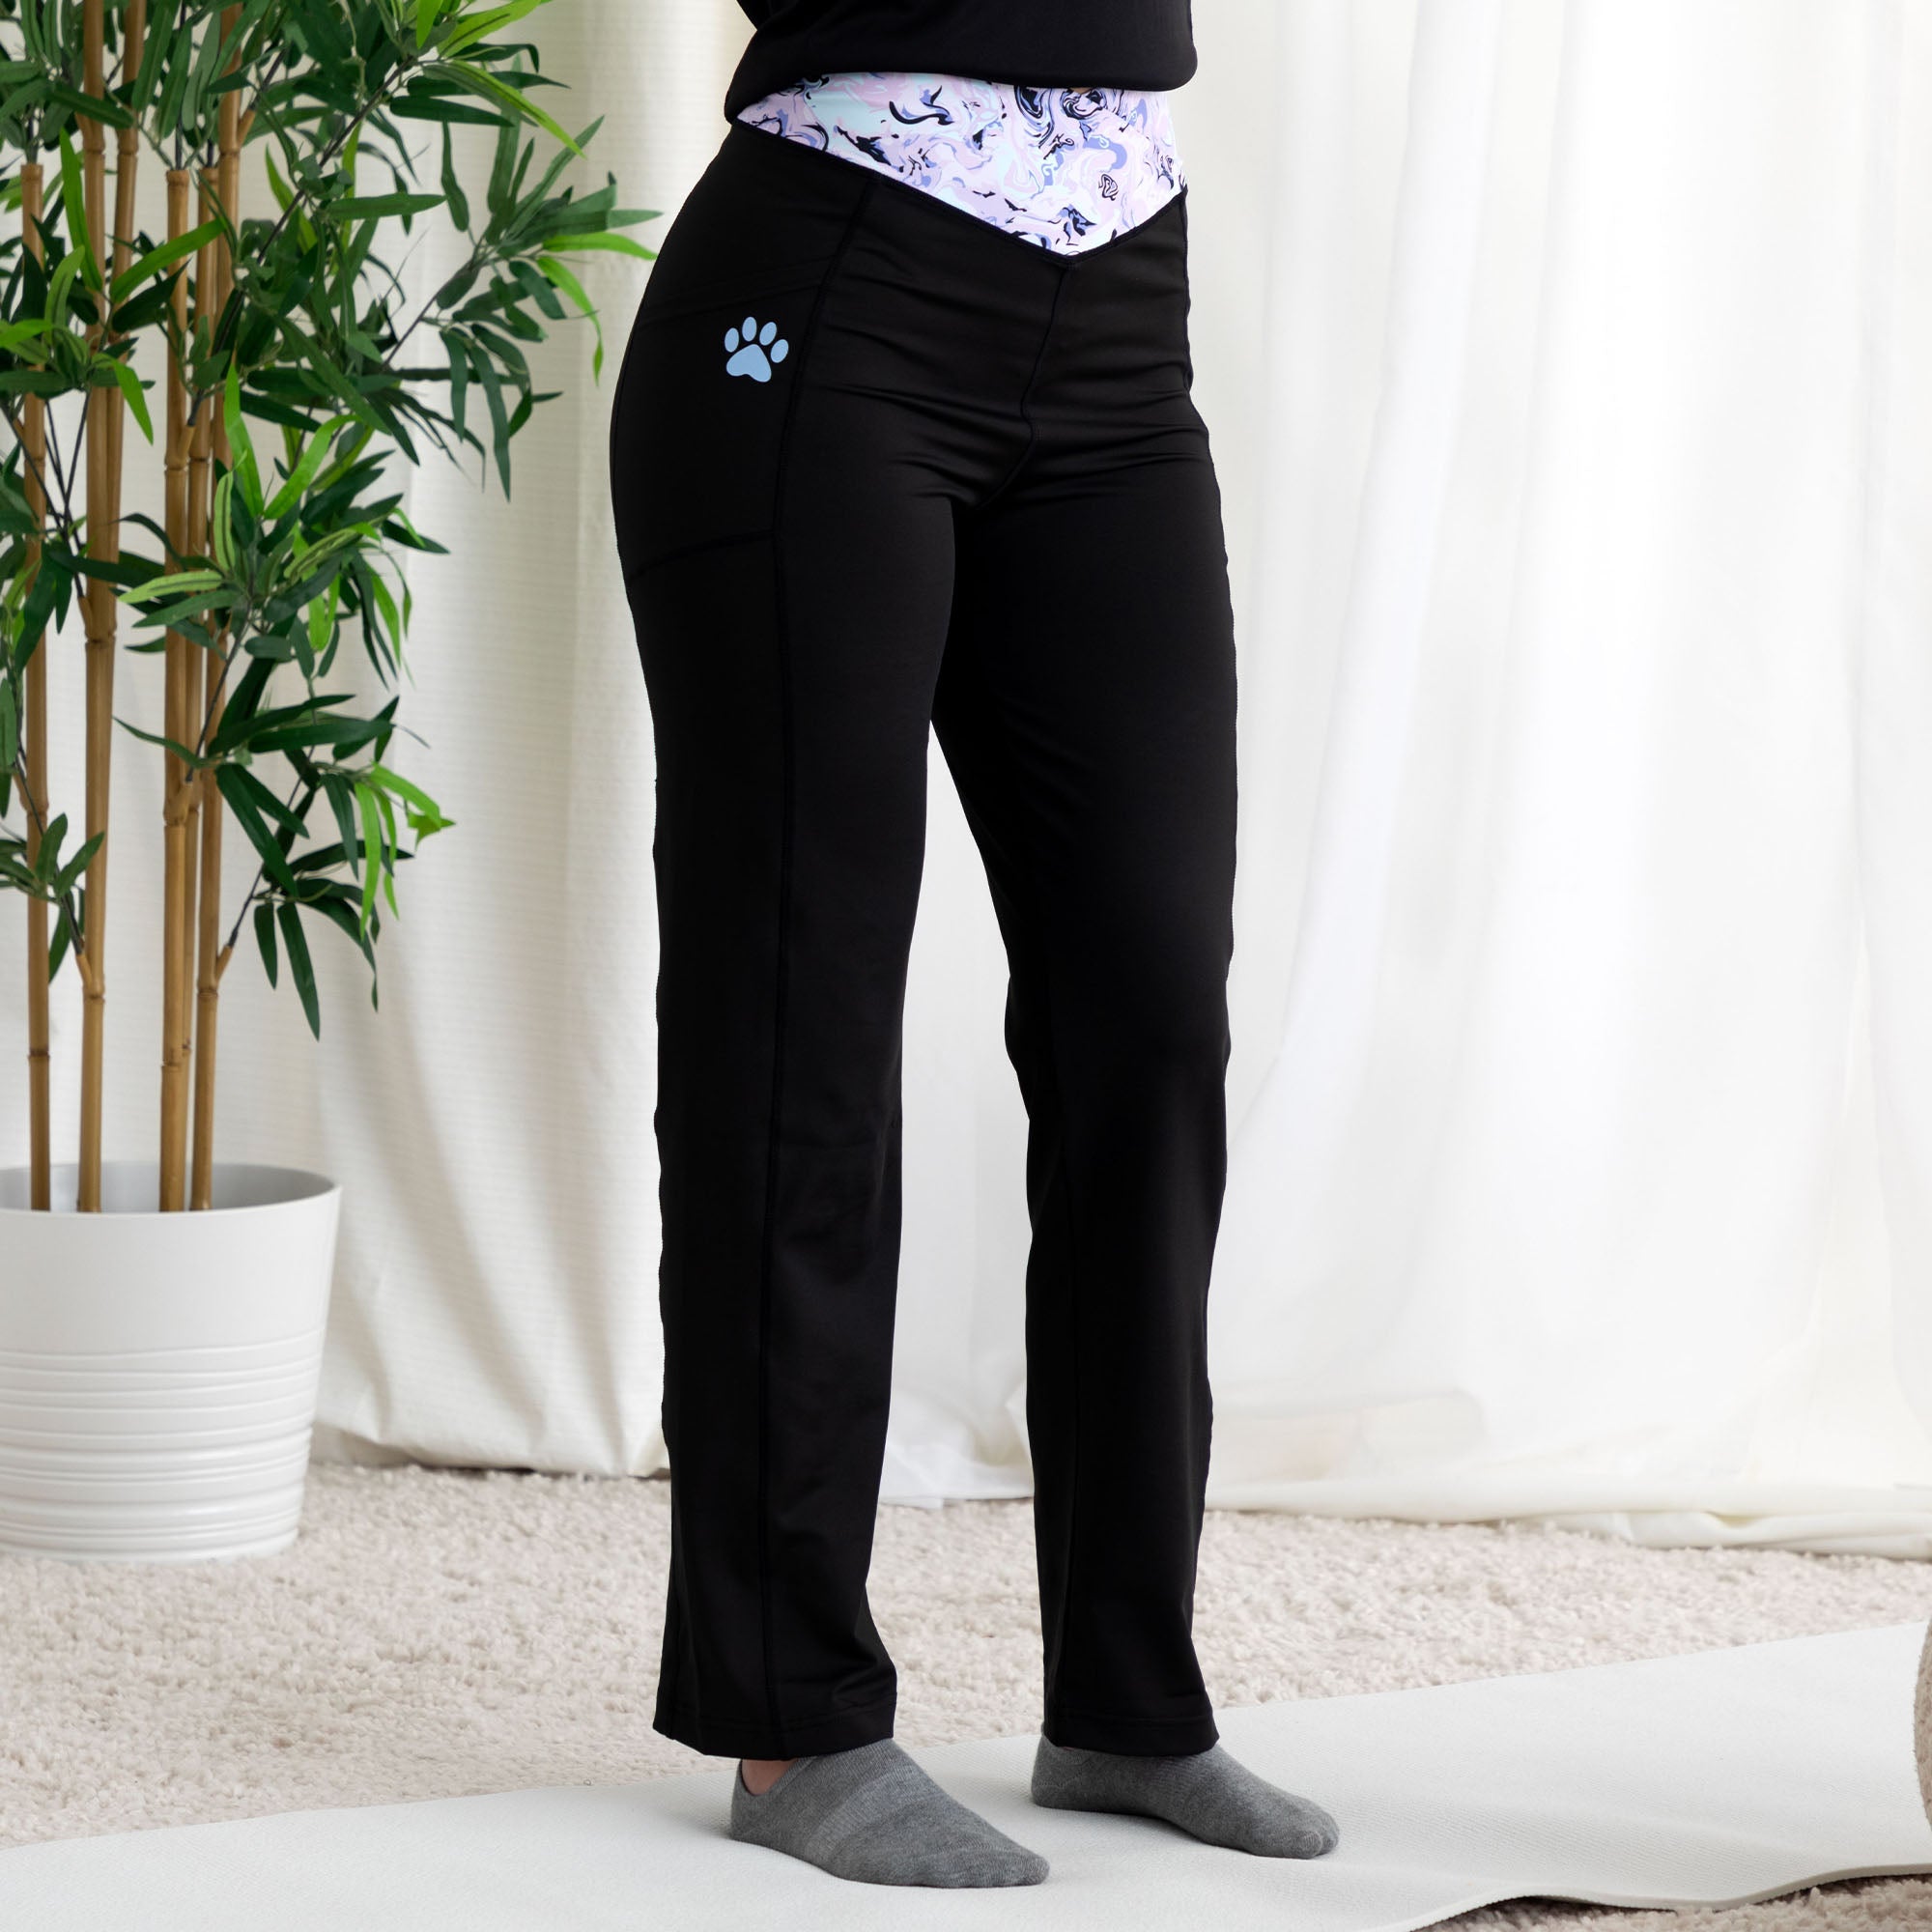 Yoga Paw Print Cross Over Separates - Black - Pants - 3X